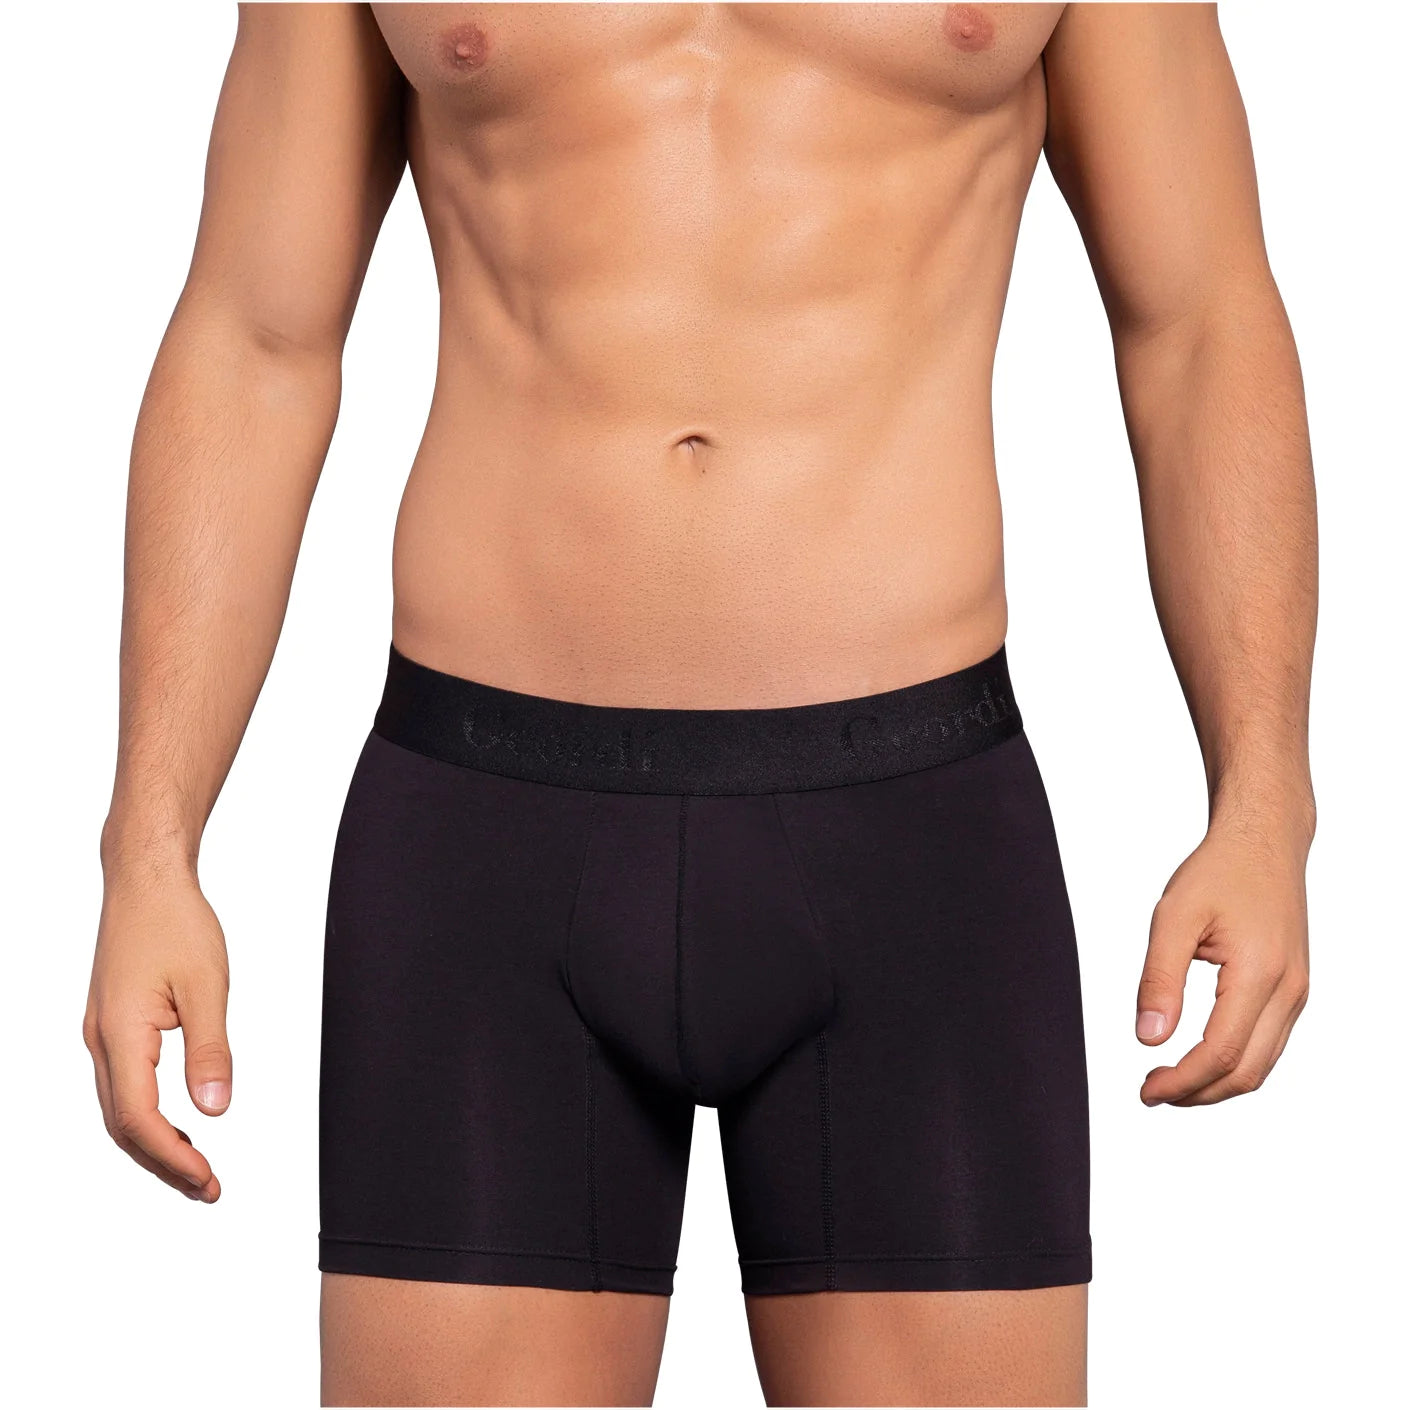 Diane & Geordi Ultimate Men's Underwear